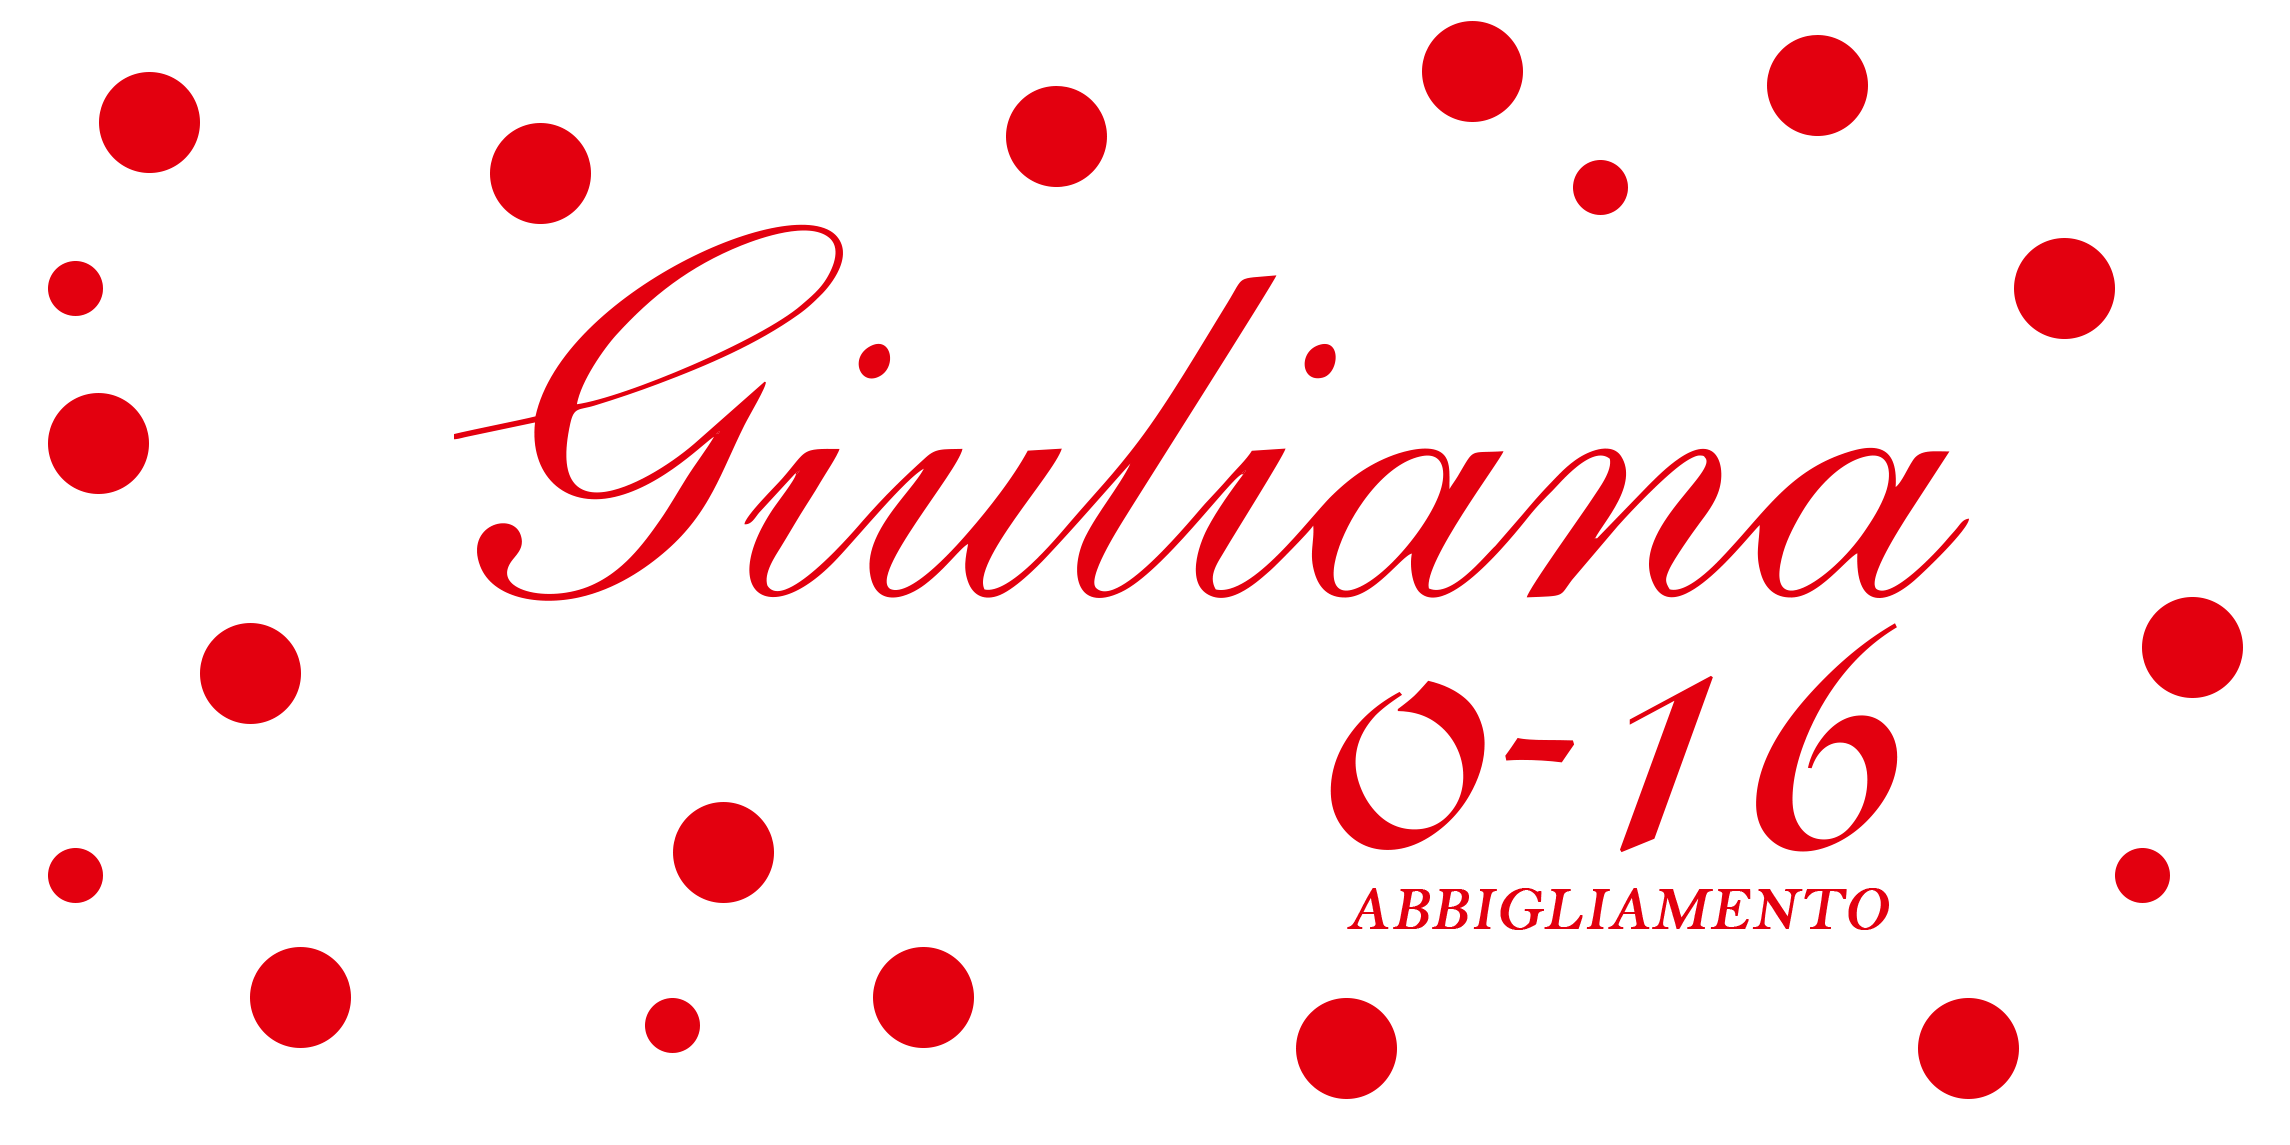 Giuliana Zitan 0-16